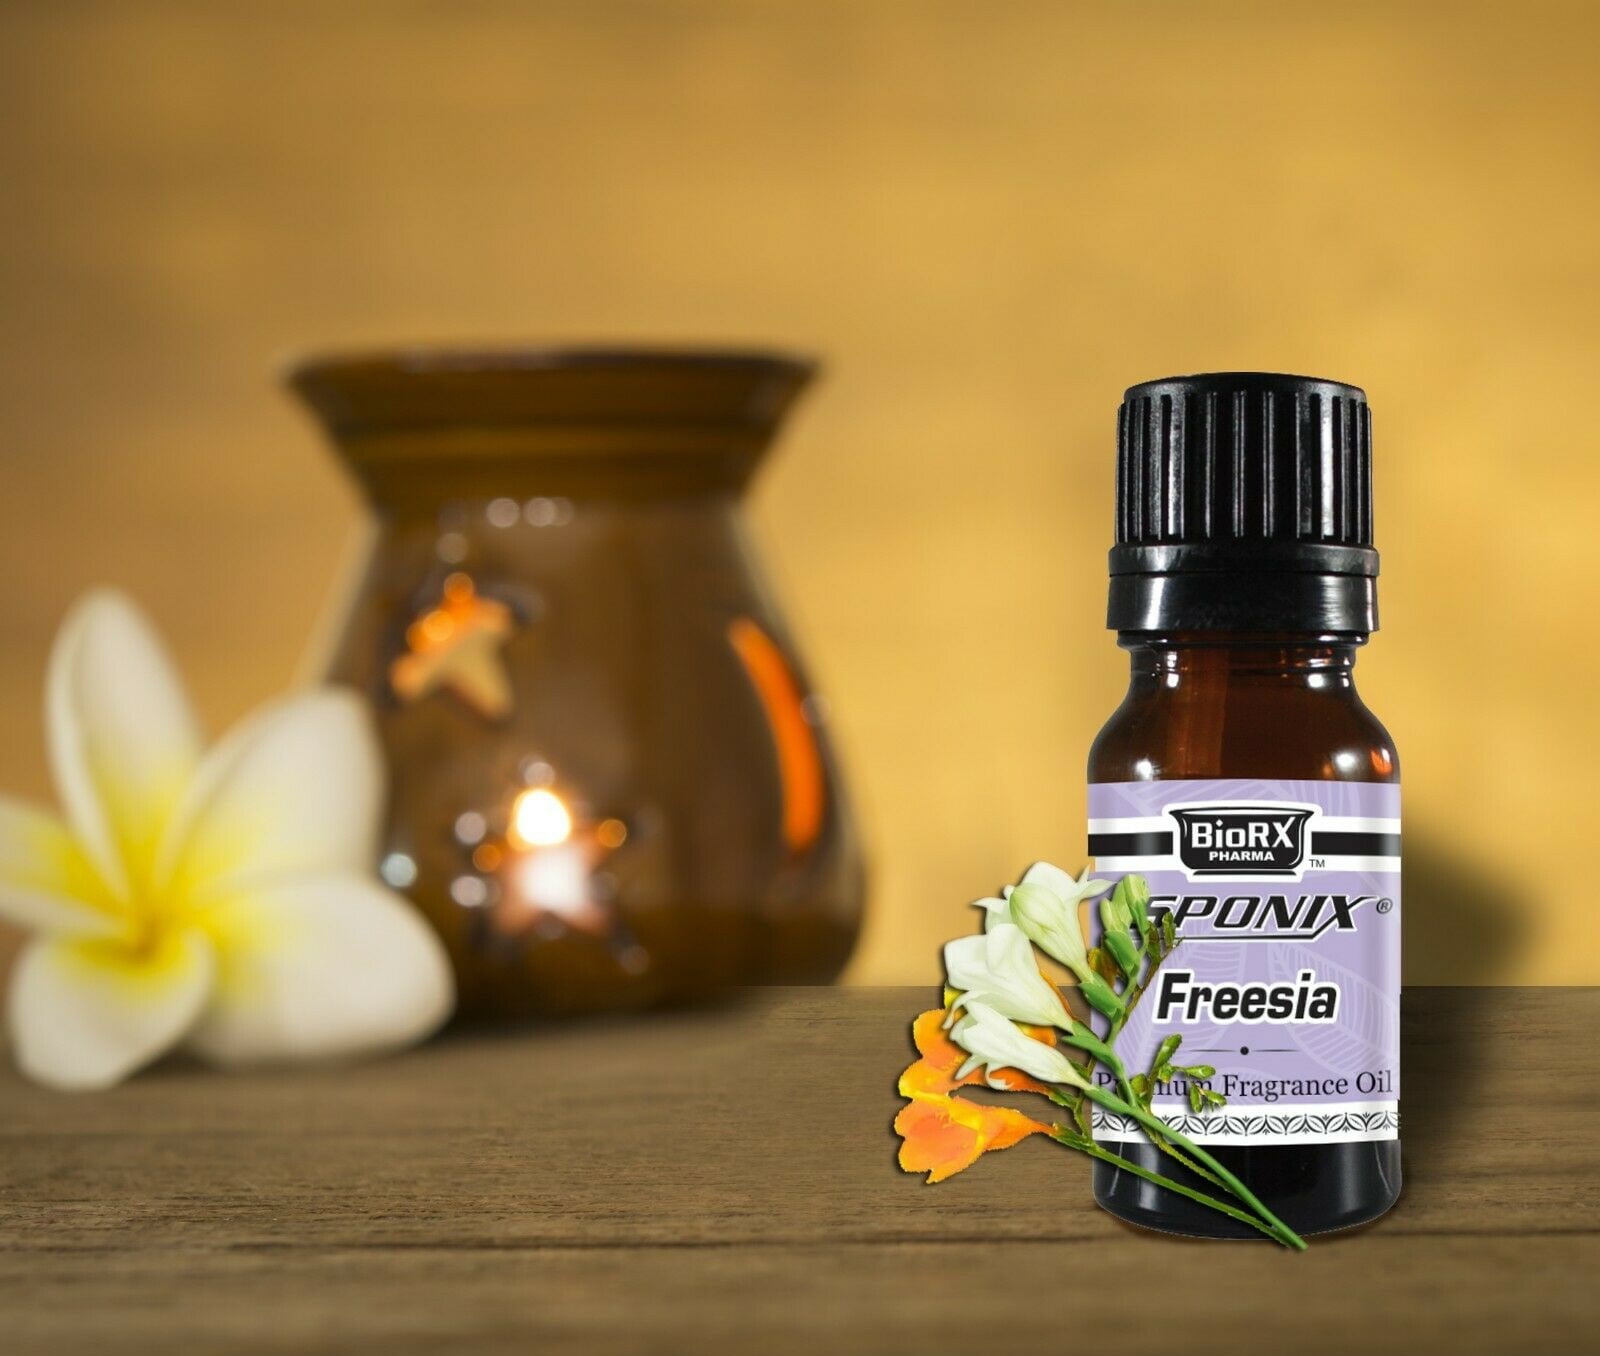 Freesia Premium Grade Fragrance Oil-phthalate Free Scented Oil